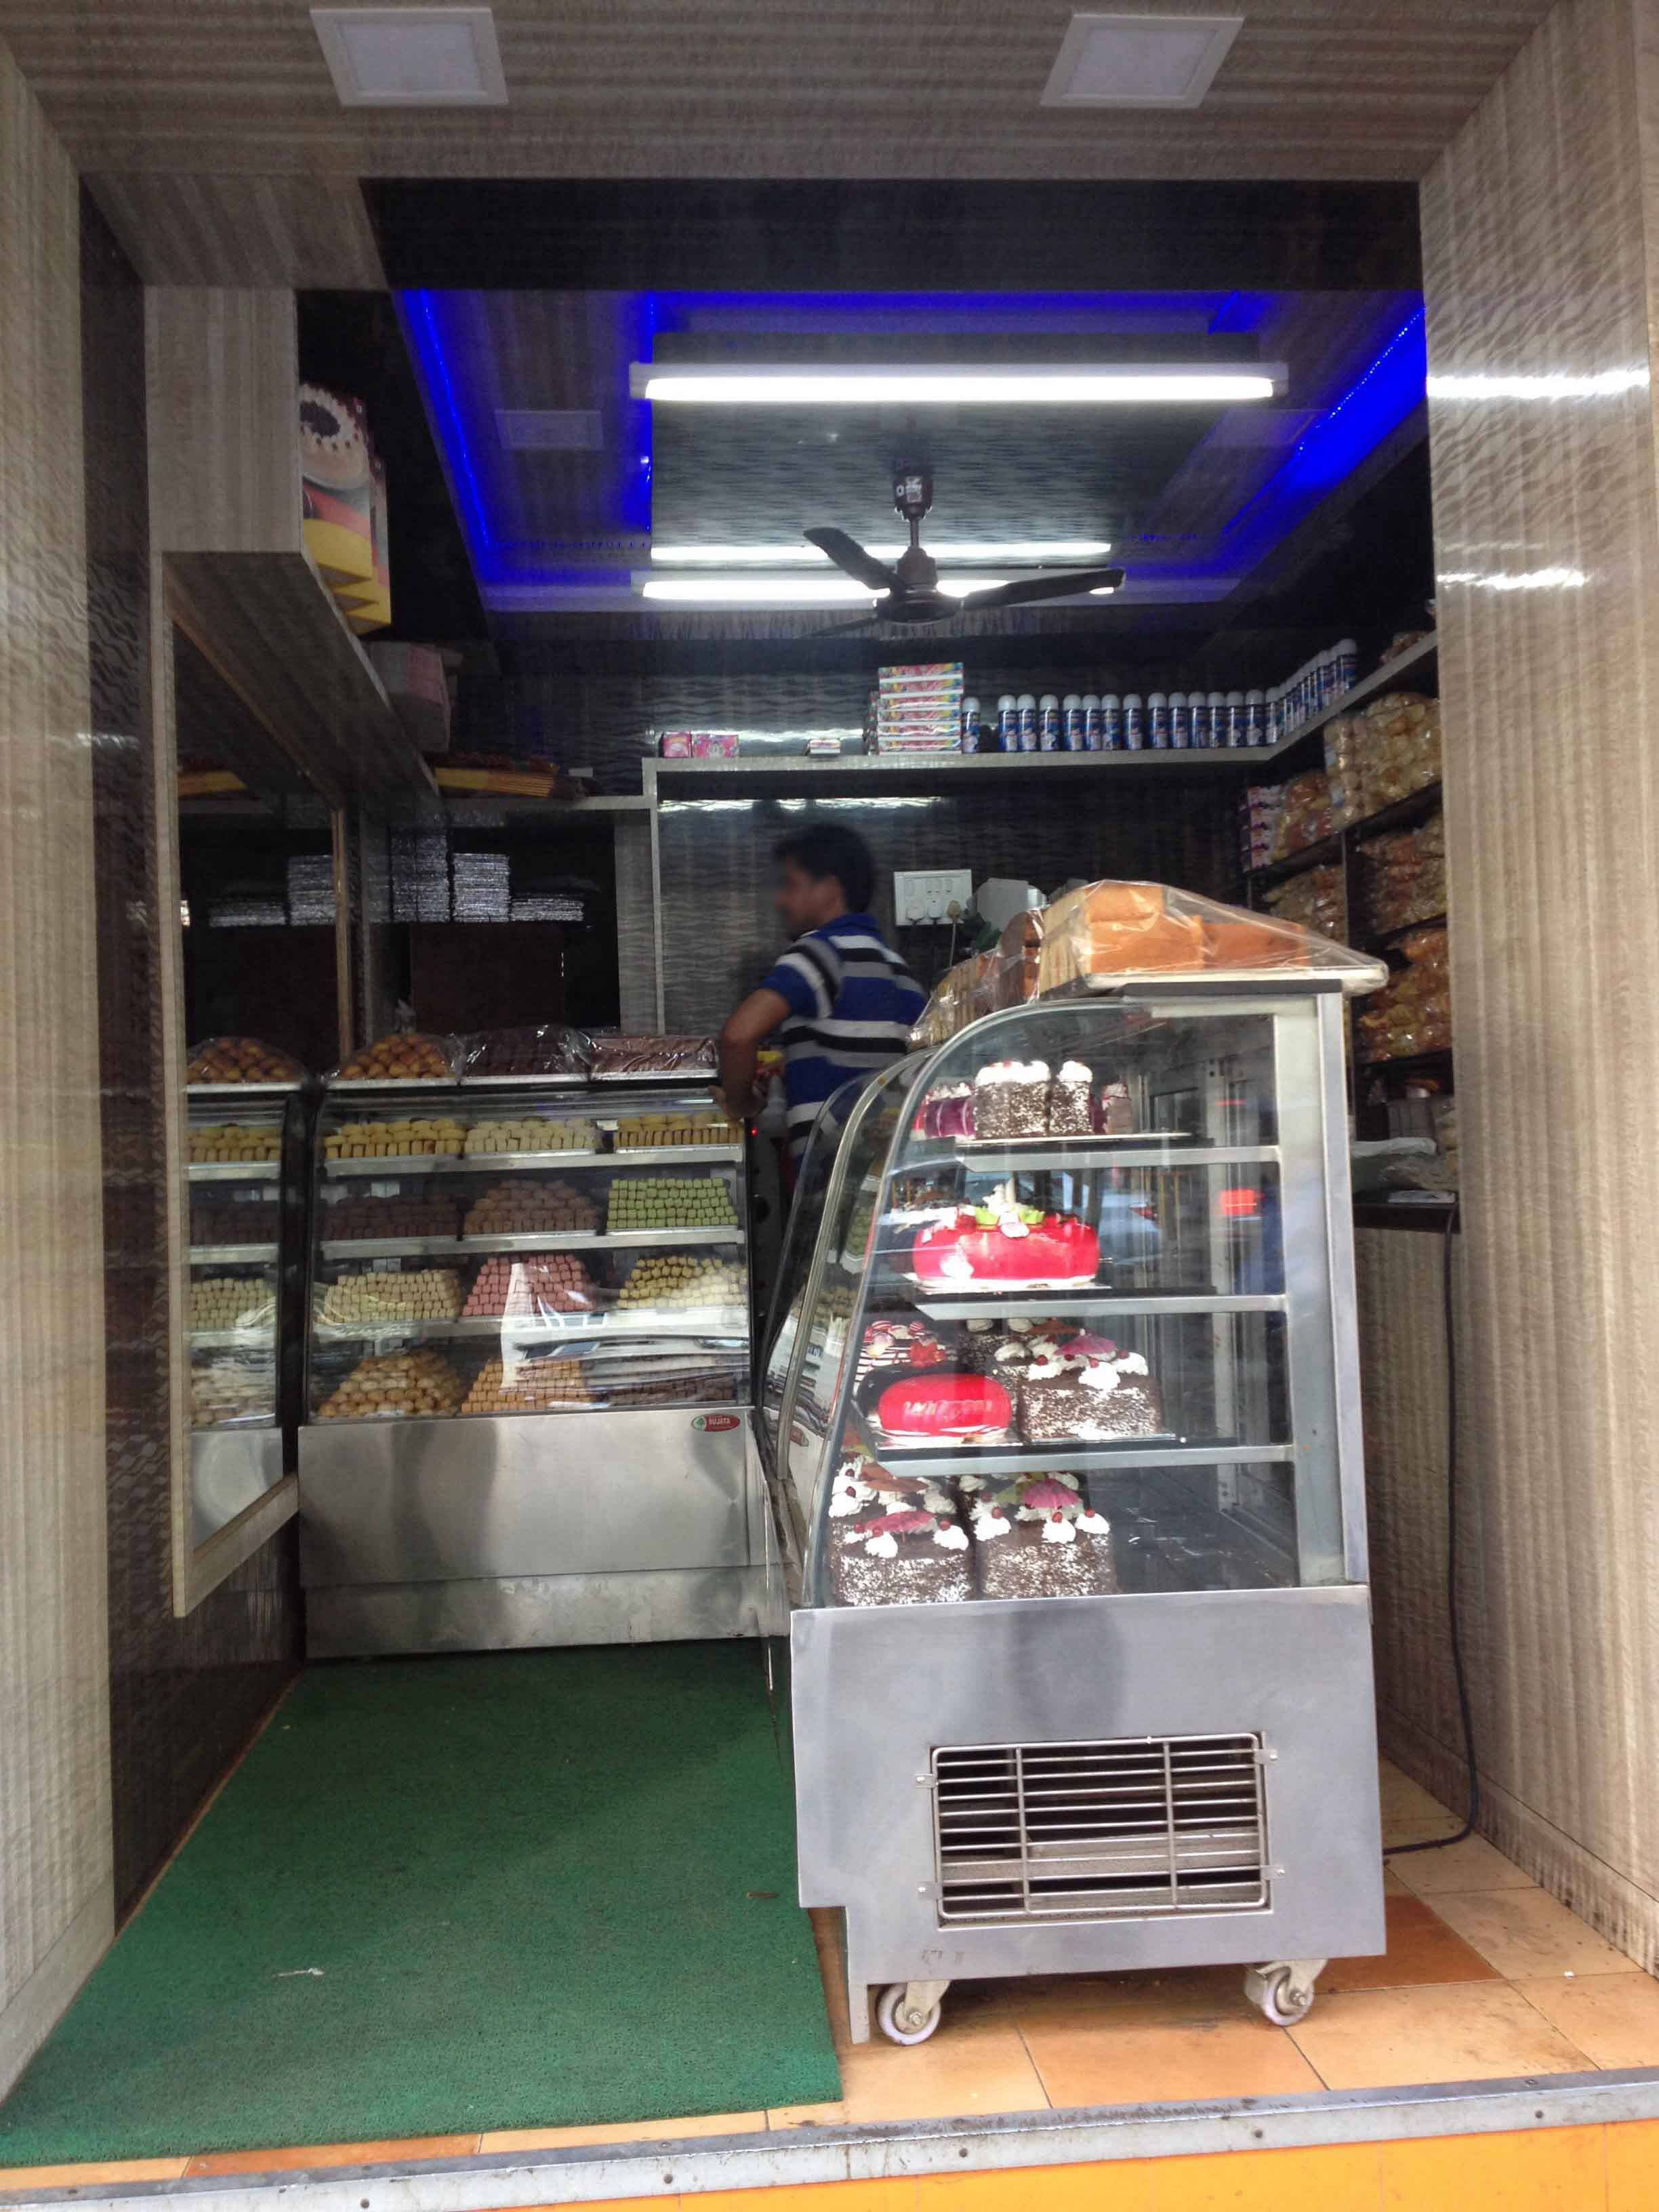 L.V. Iyengar's Bakery, Bengaluru, E-45 - Restaurant reviews